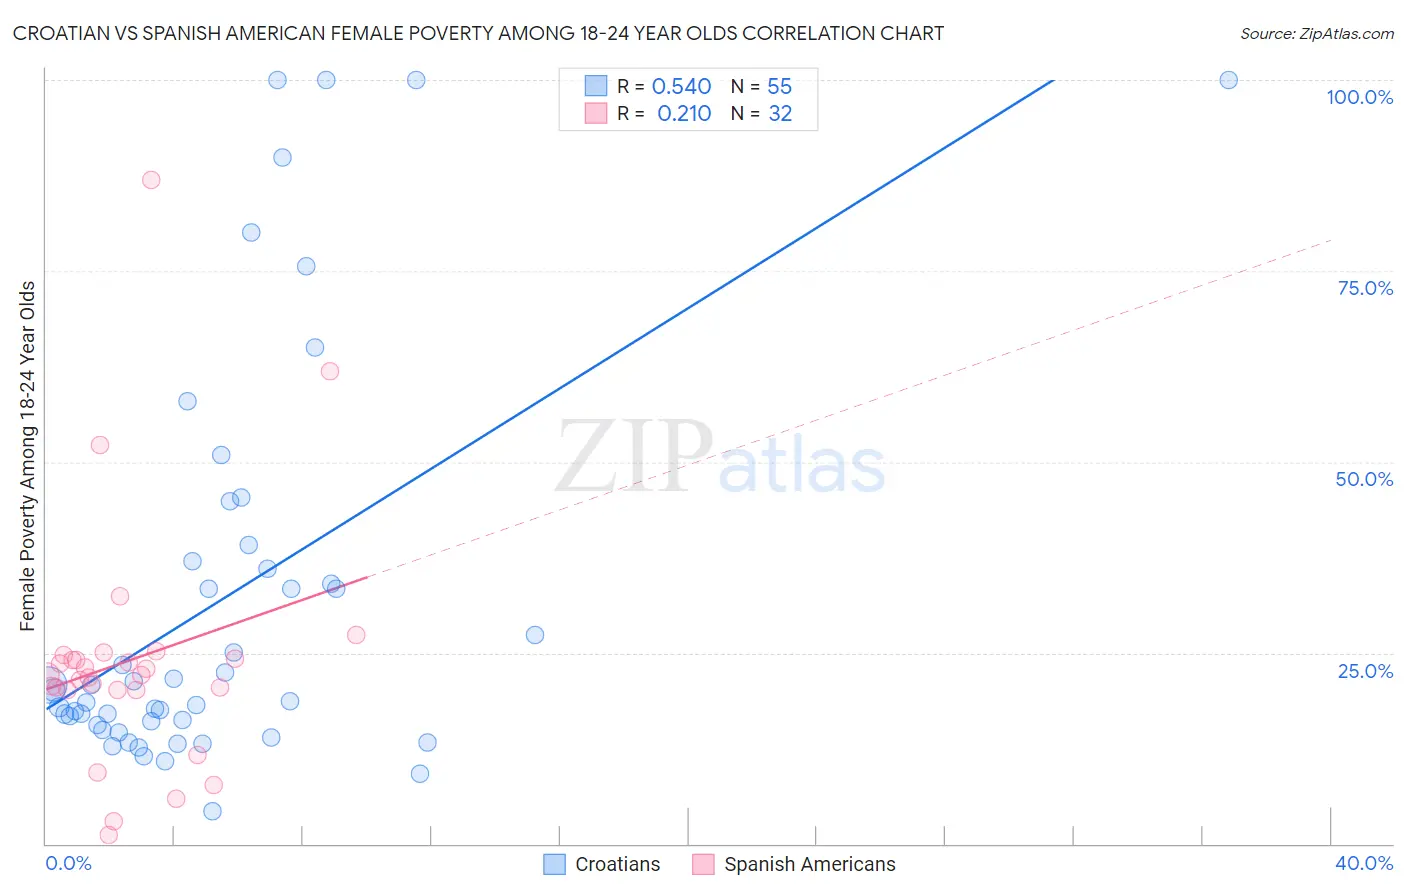 Croatian vs Spanish American Female Poverty Among 18-24 Year Olds